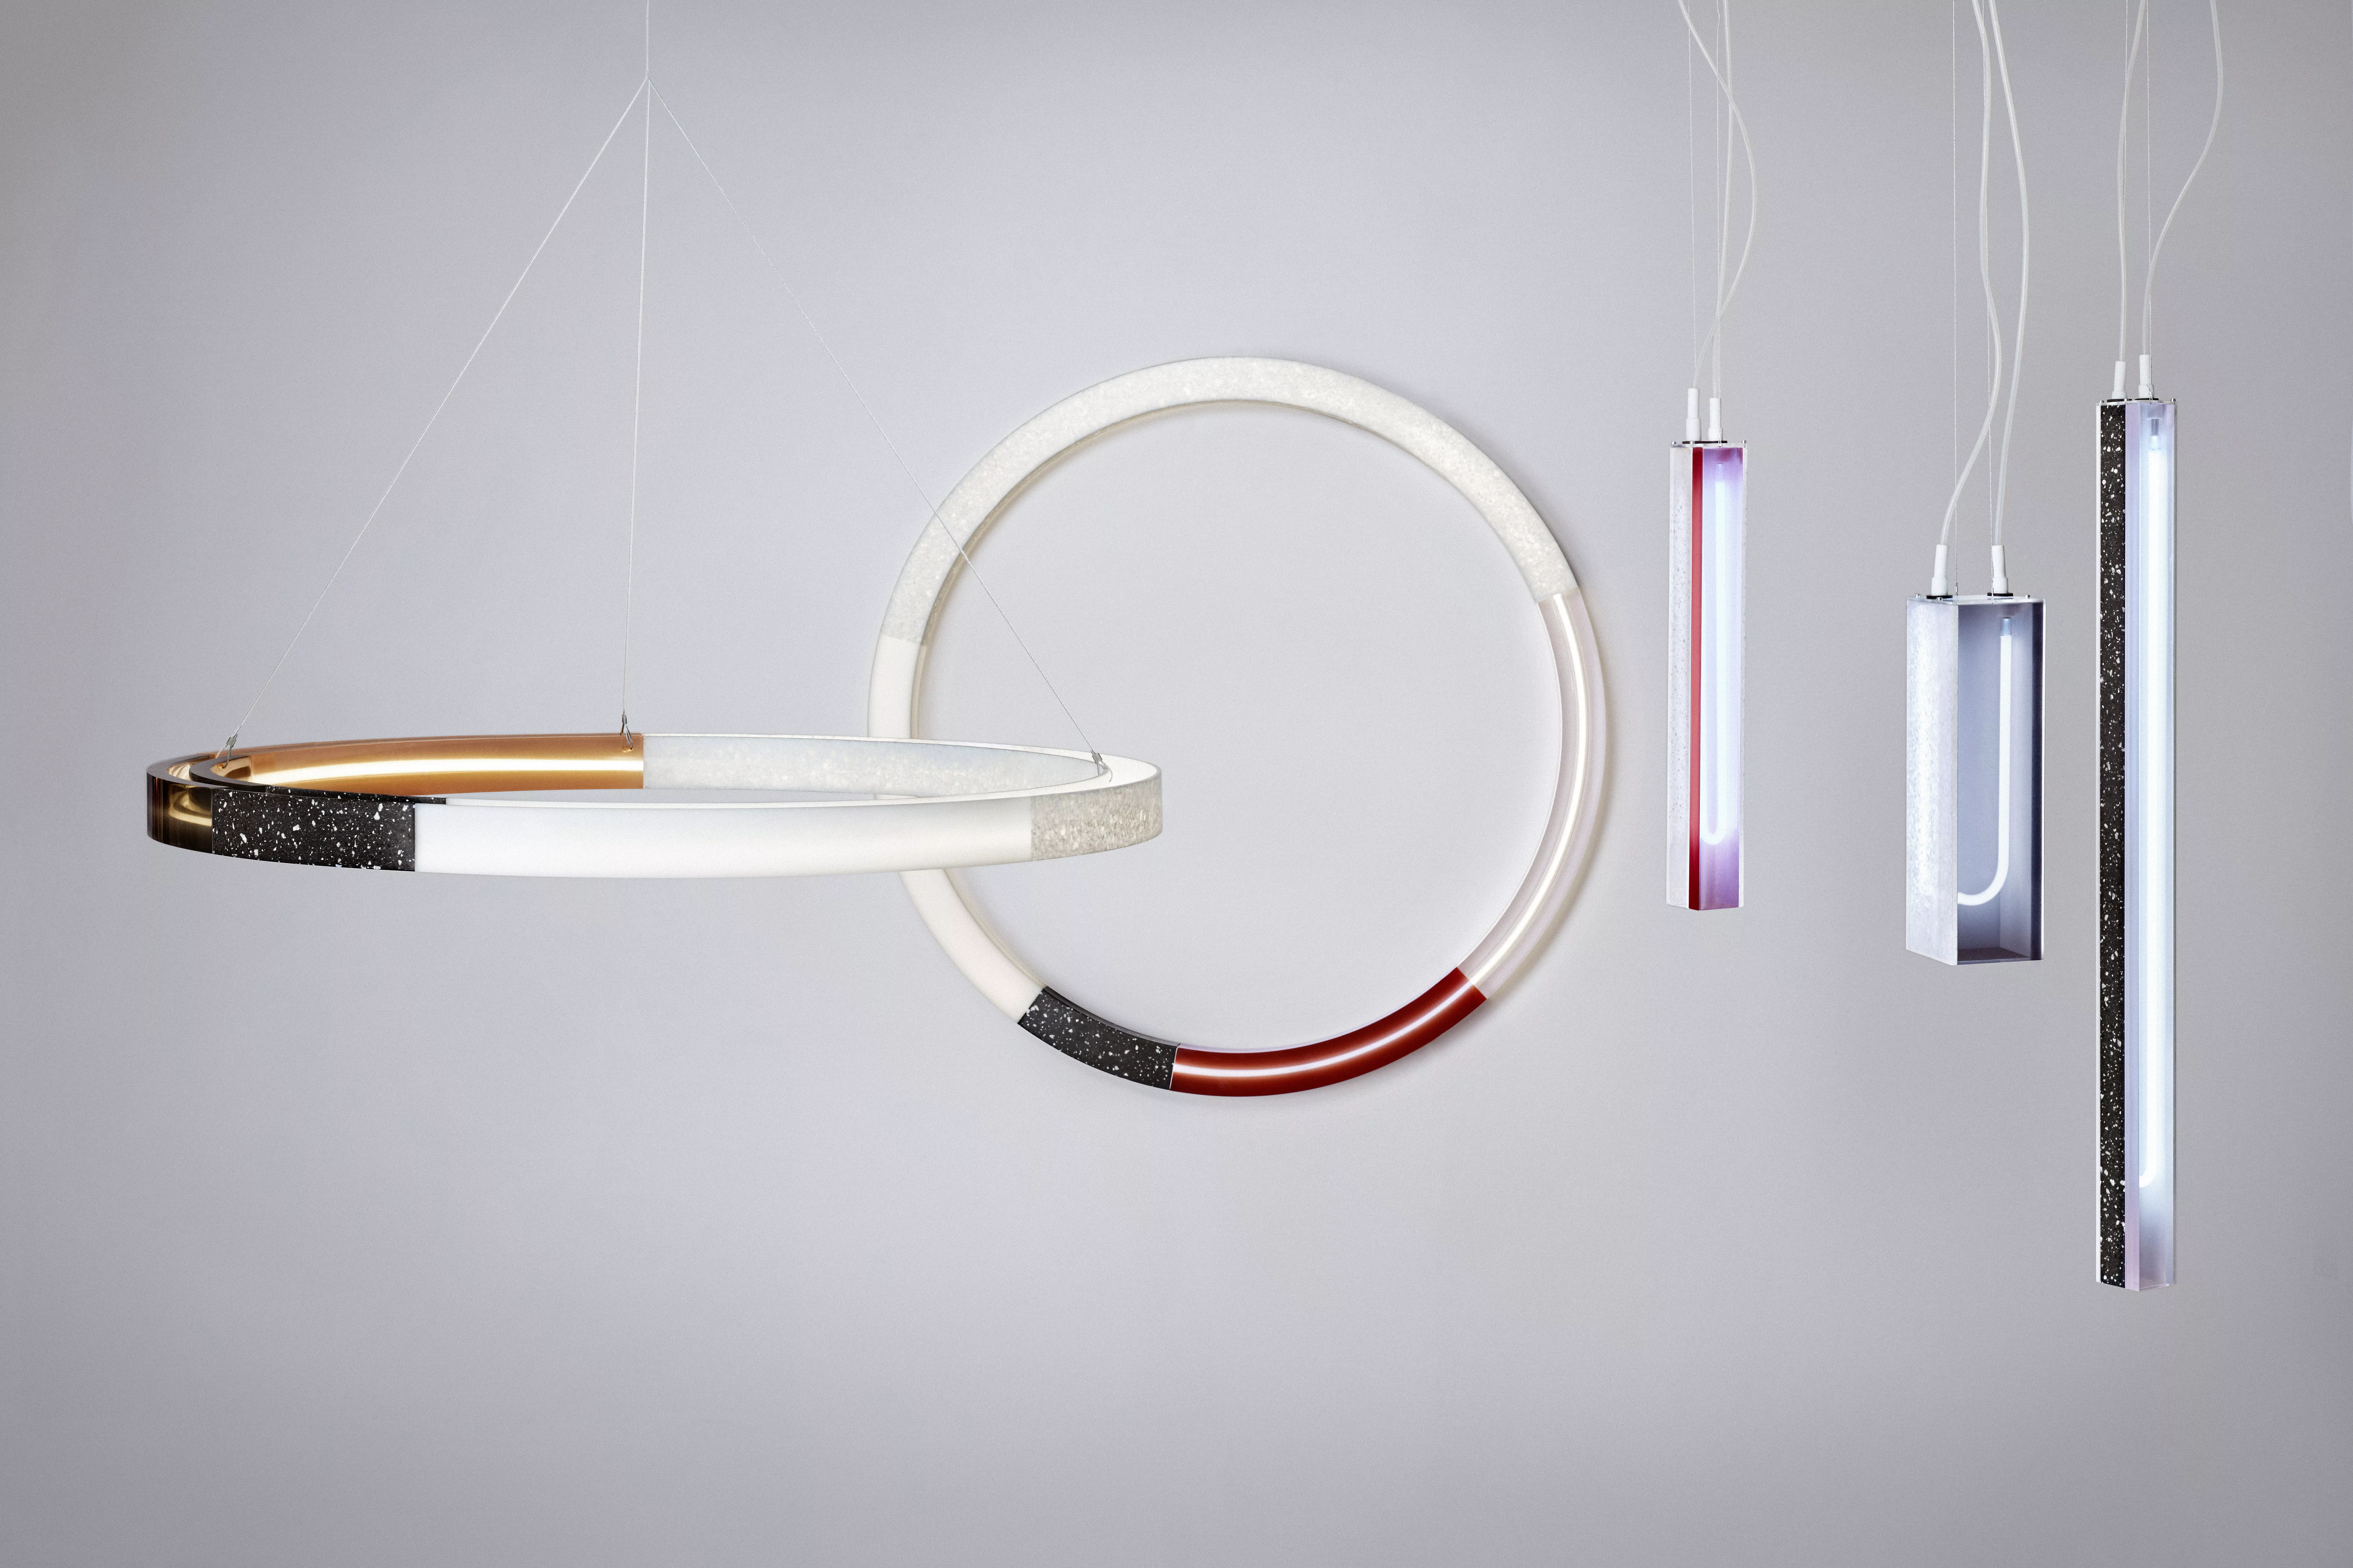 HIMACS at the Milan Design Week: a single material, infinite applications